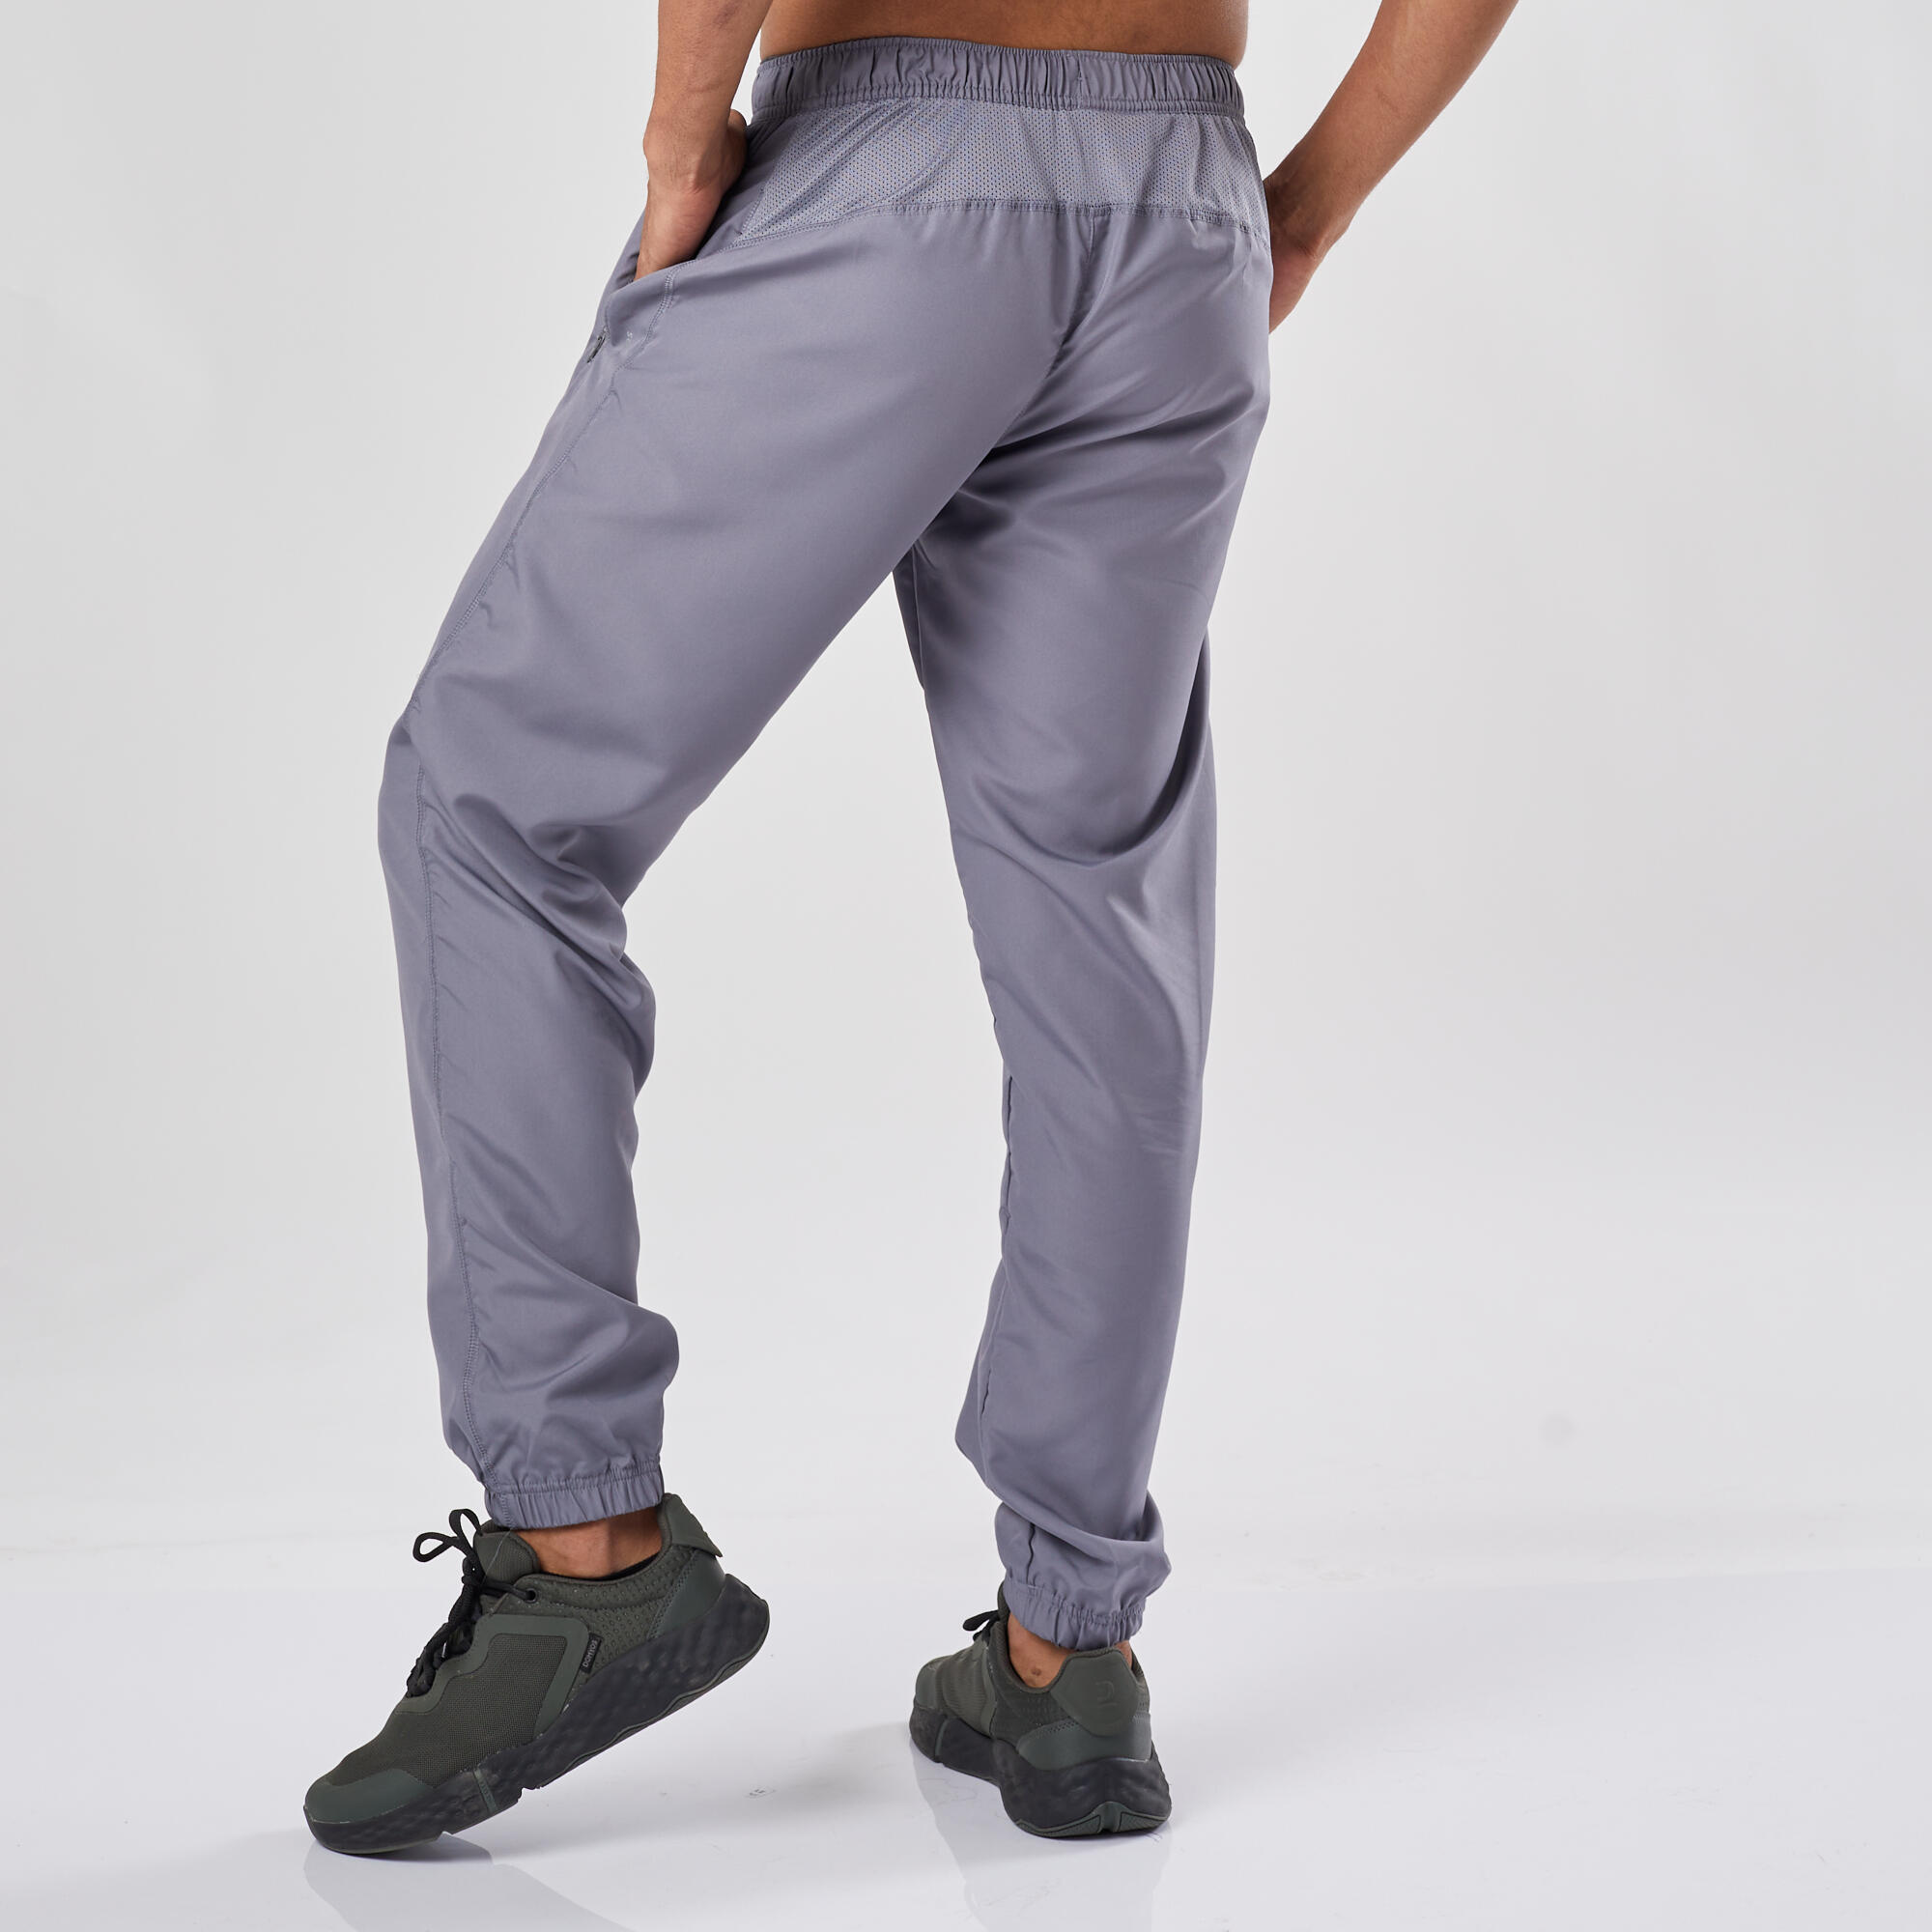 HSMQHJWE Gallery Dept Pants Track Pants Zipper Pants Tights Solid Stretch  Line Quick Running Training Men Breathable Pants Color Design Men's Pants  Stocking Gift Boy - Walmart.com